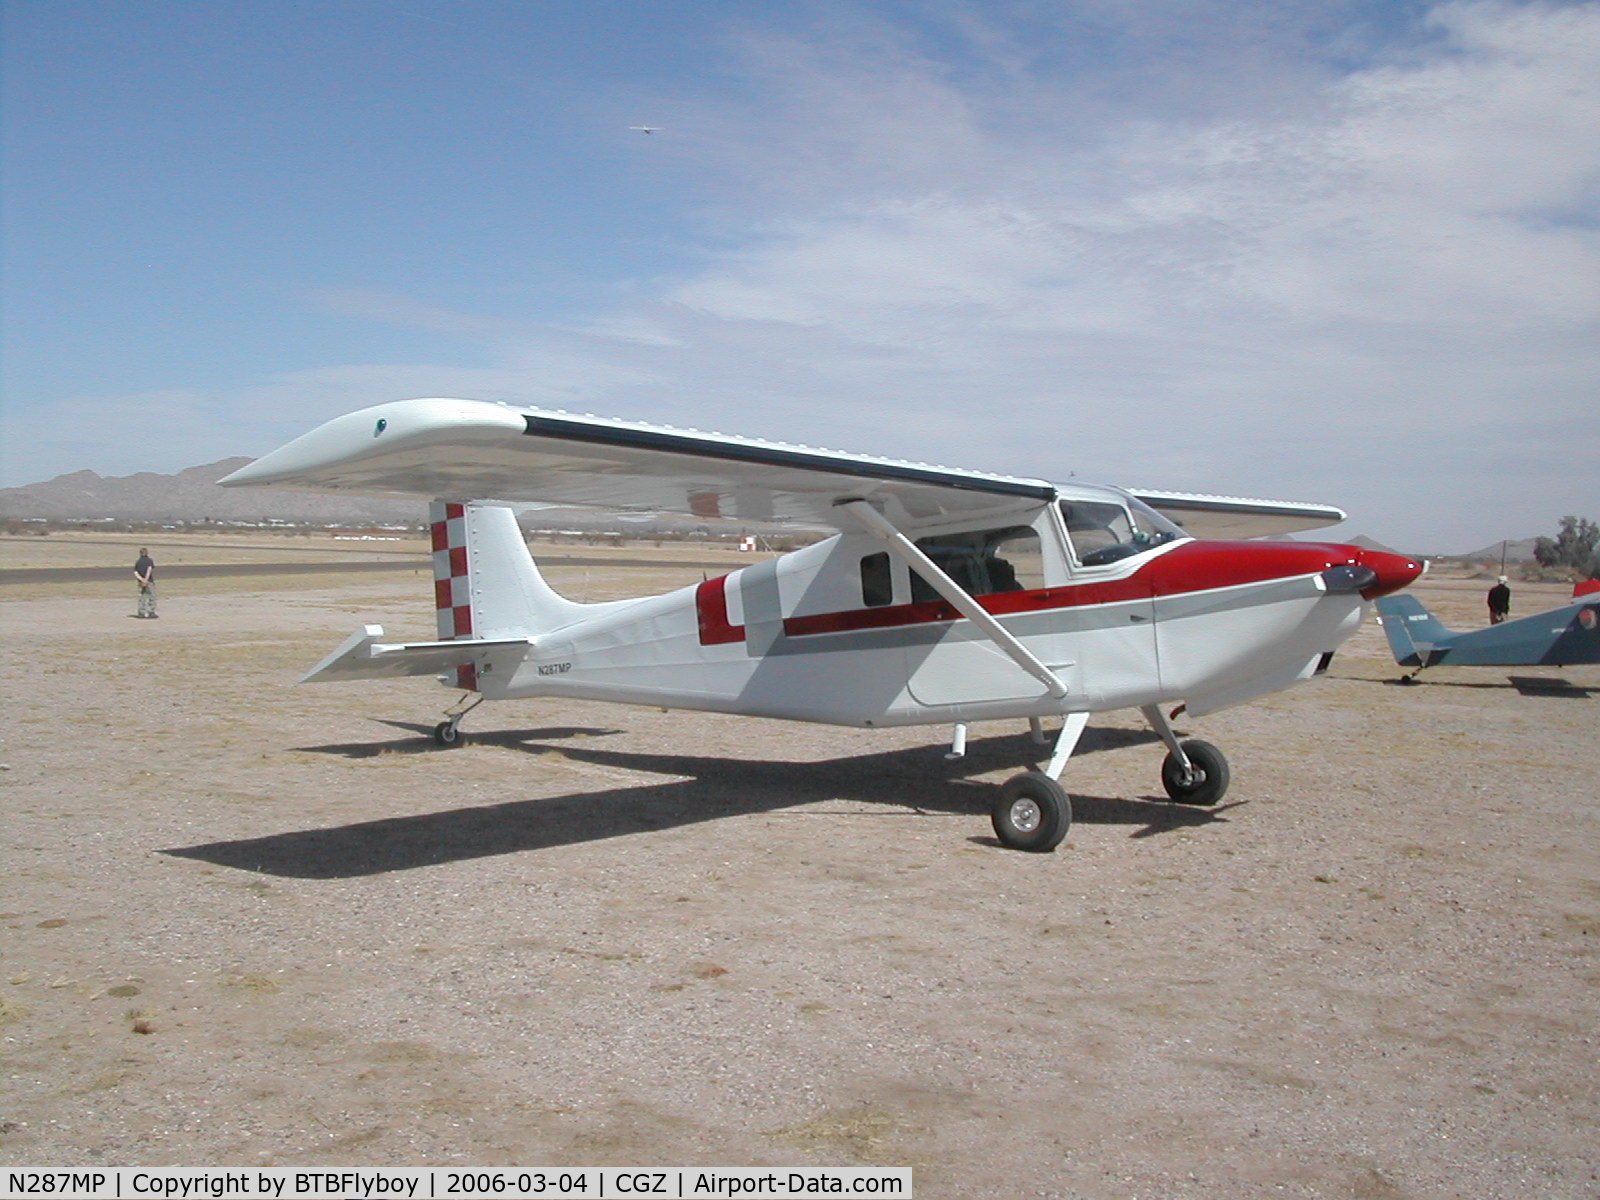 N287MP, 2003 Murphy SR2500 Super Rebel C/N 015SR, photo taken at the 2006 Cactus AAA Fly-in in Casa Grande, AZ